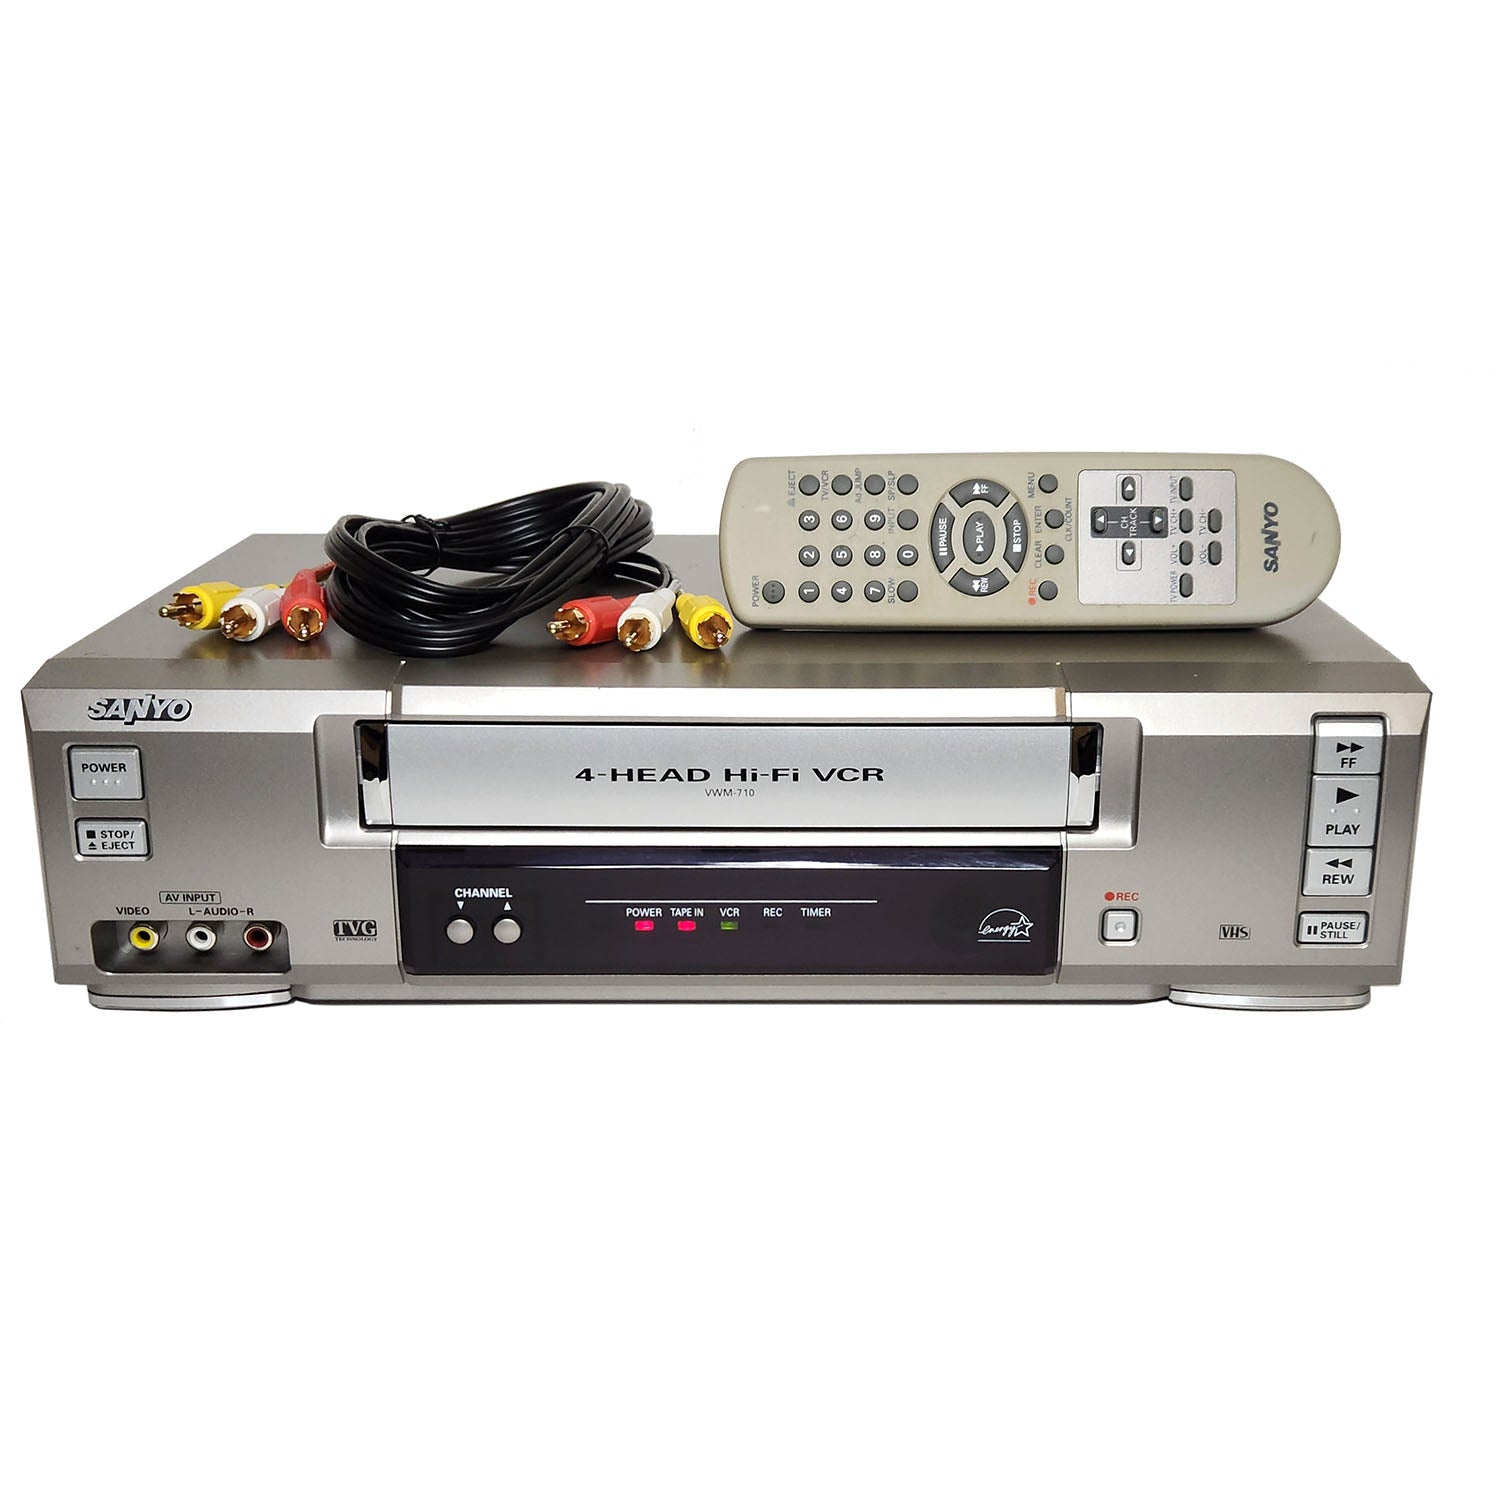 Sanyo VWM-710 VCR, 4-Head Hi-Fi Stereo